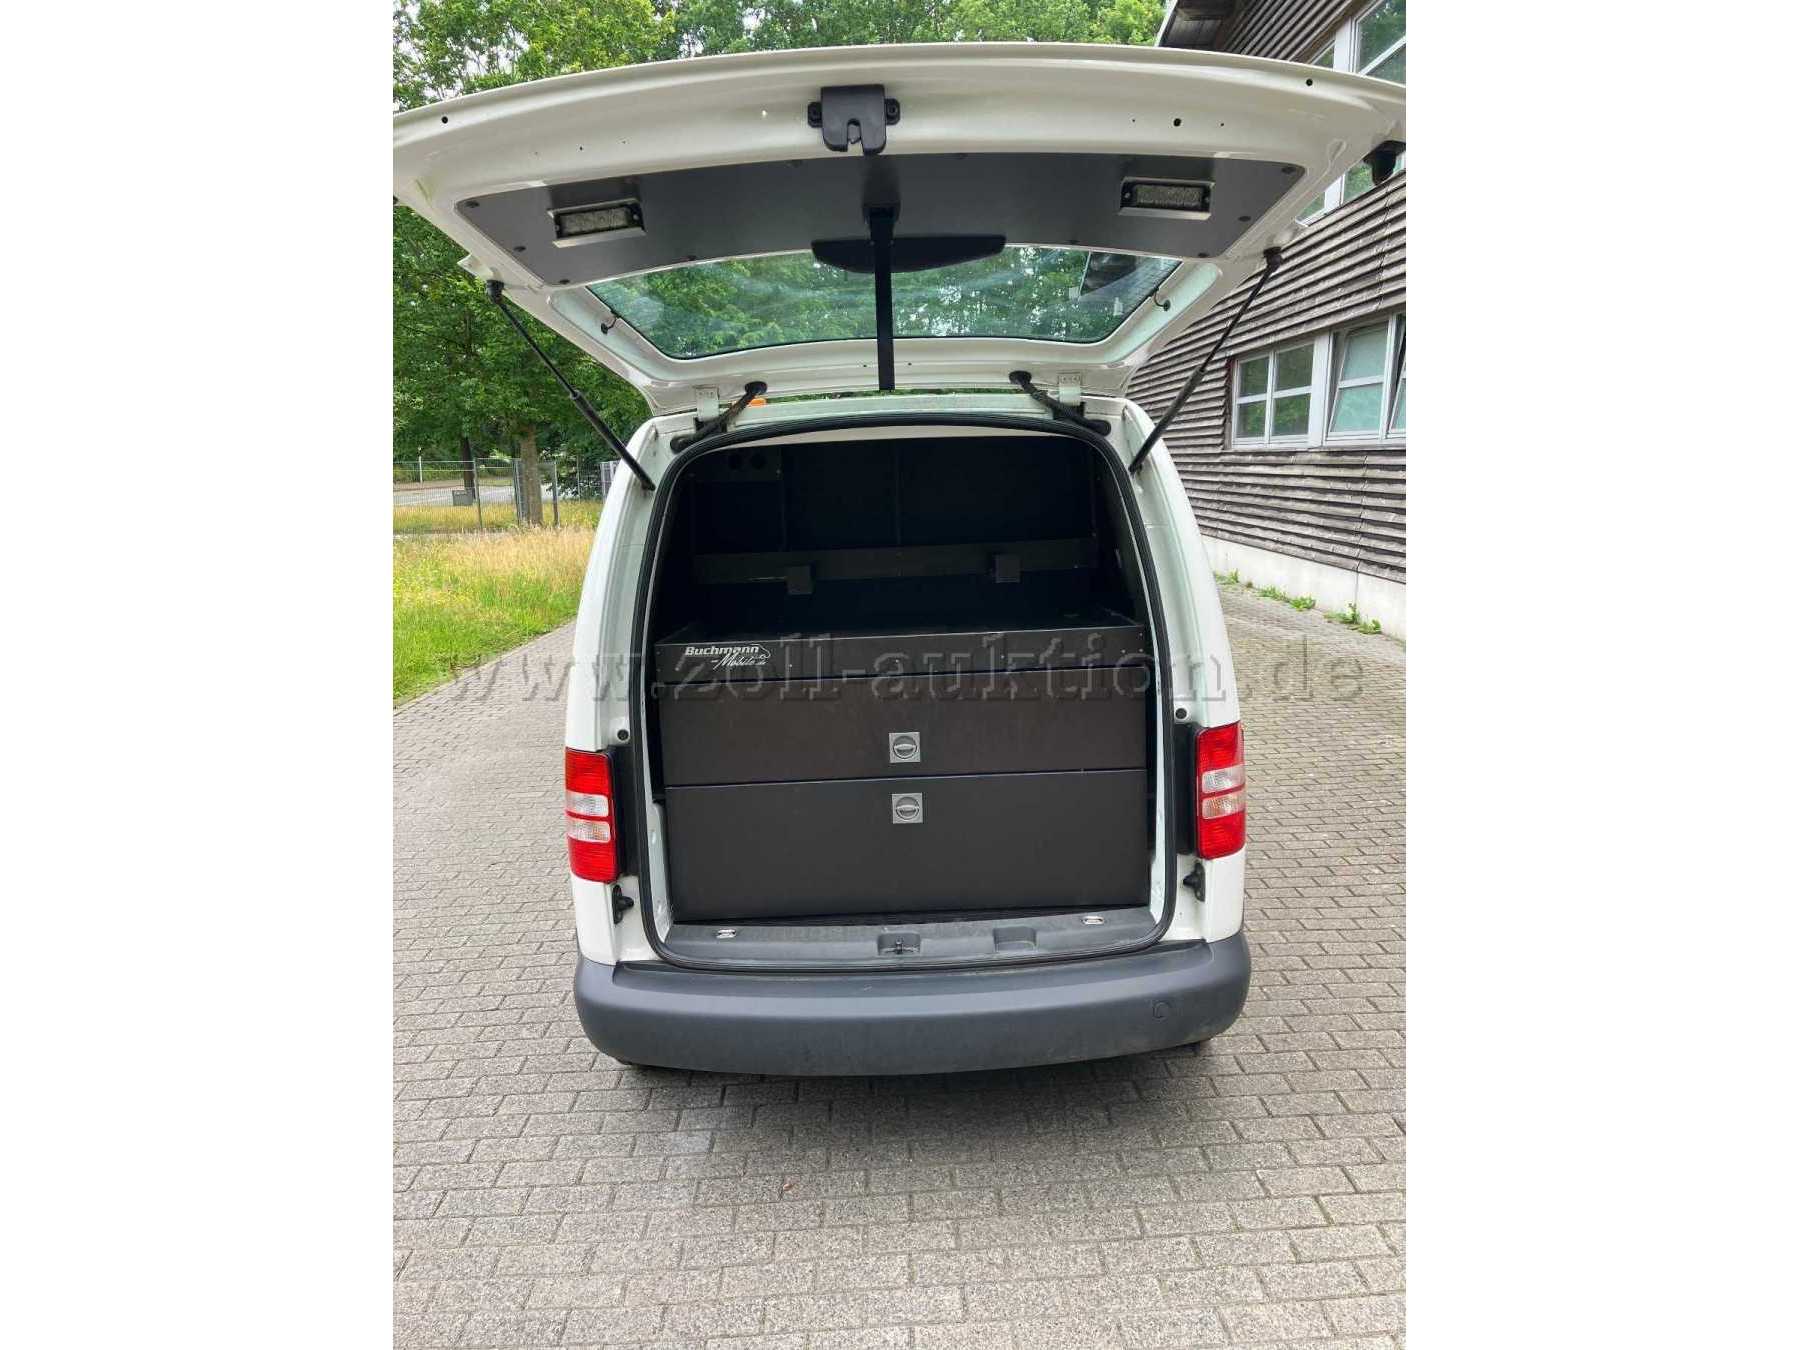 VW Caddy 2.0 Ansicht hinten, Hecktür geöffnet